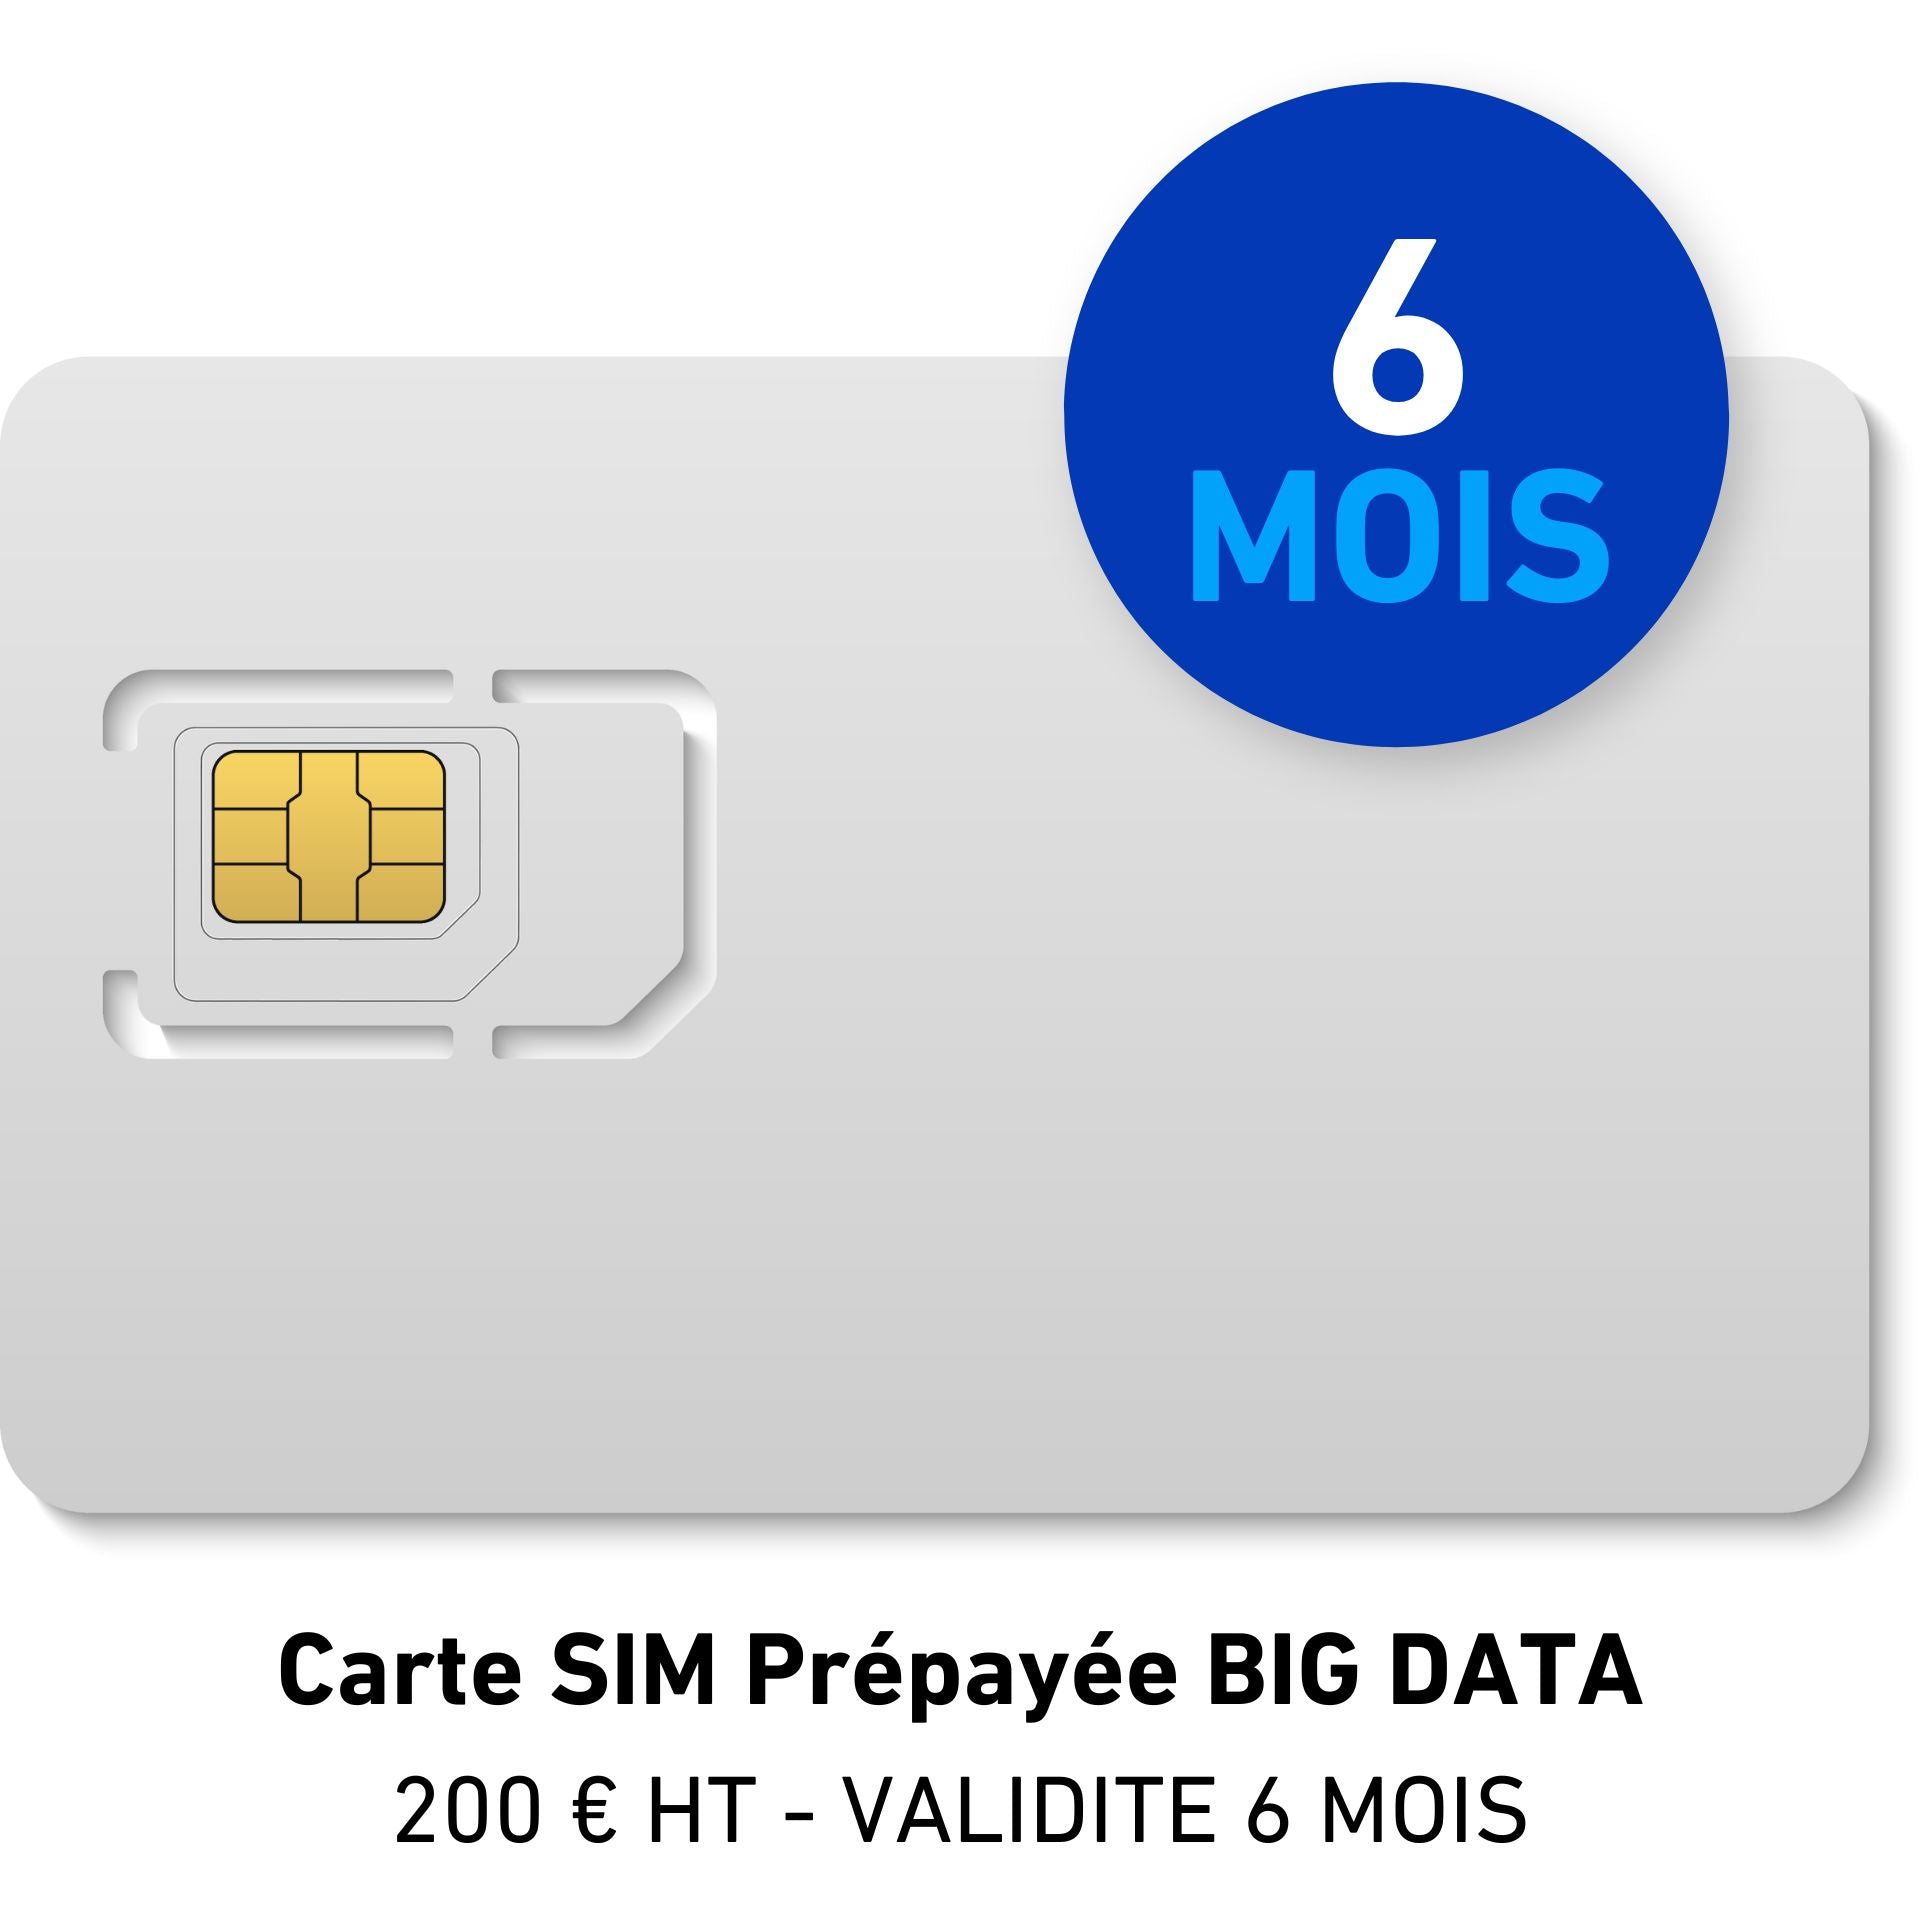 BIG DATA prepaid SIM card 200 € HT - VALIDITY 6 MONTHS